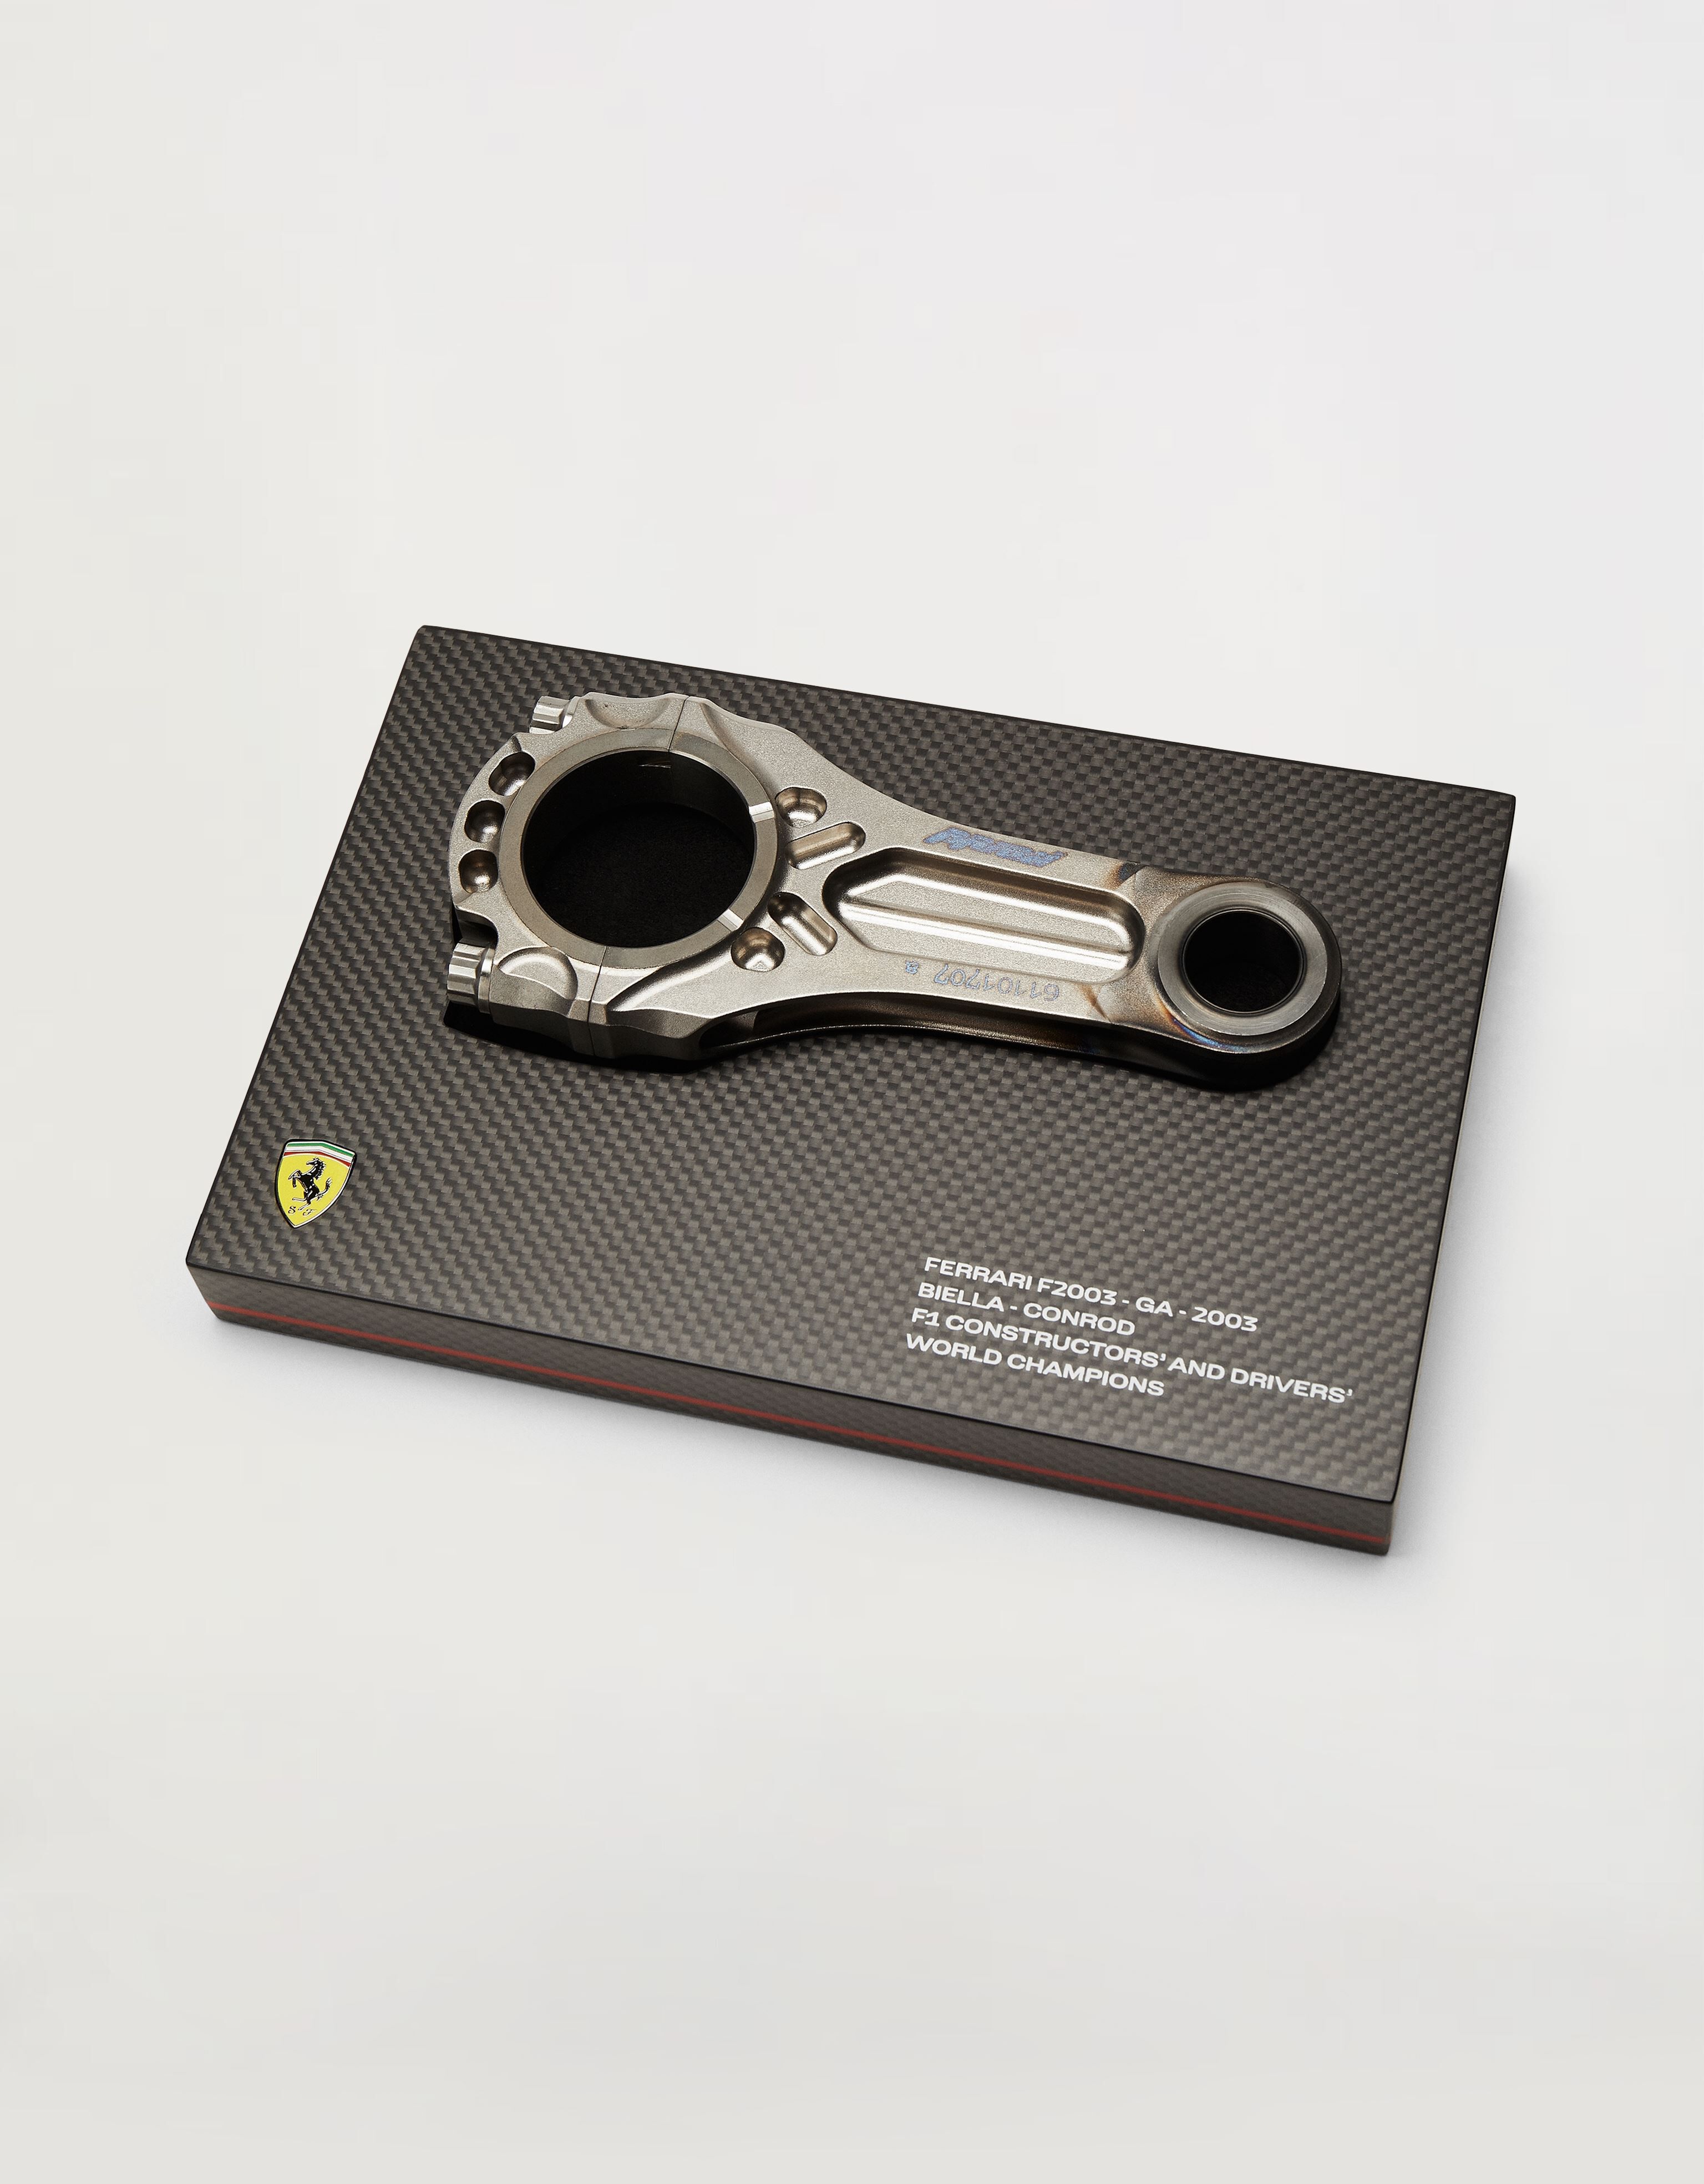 Ferrari Original piston from the F2003, winner of the 2003 Constructors' and Drivers' Championships MULTICOLOUR 15389f